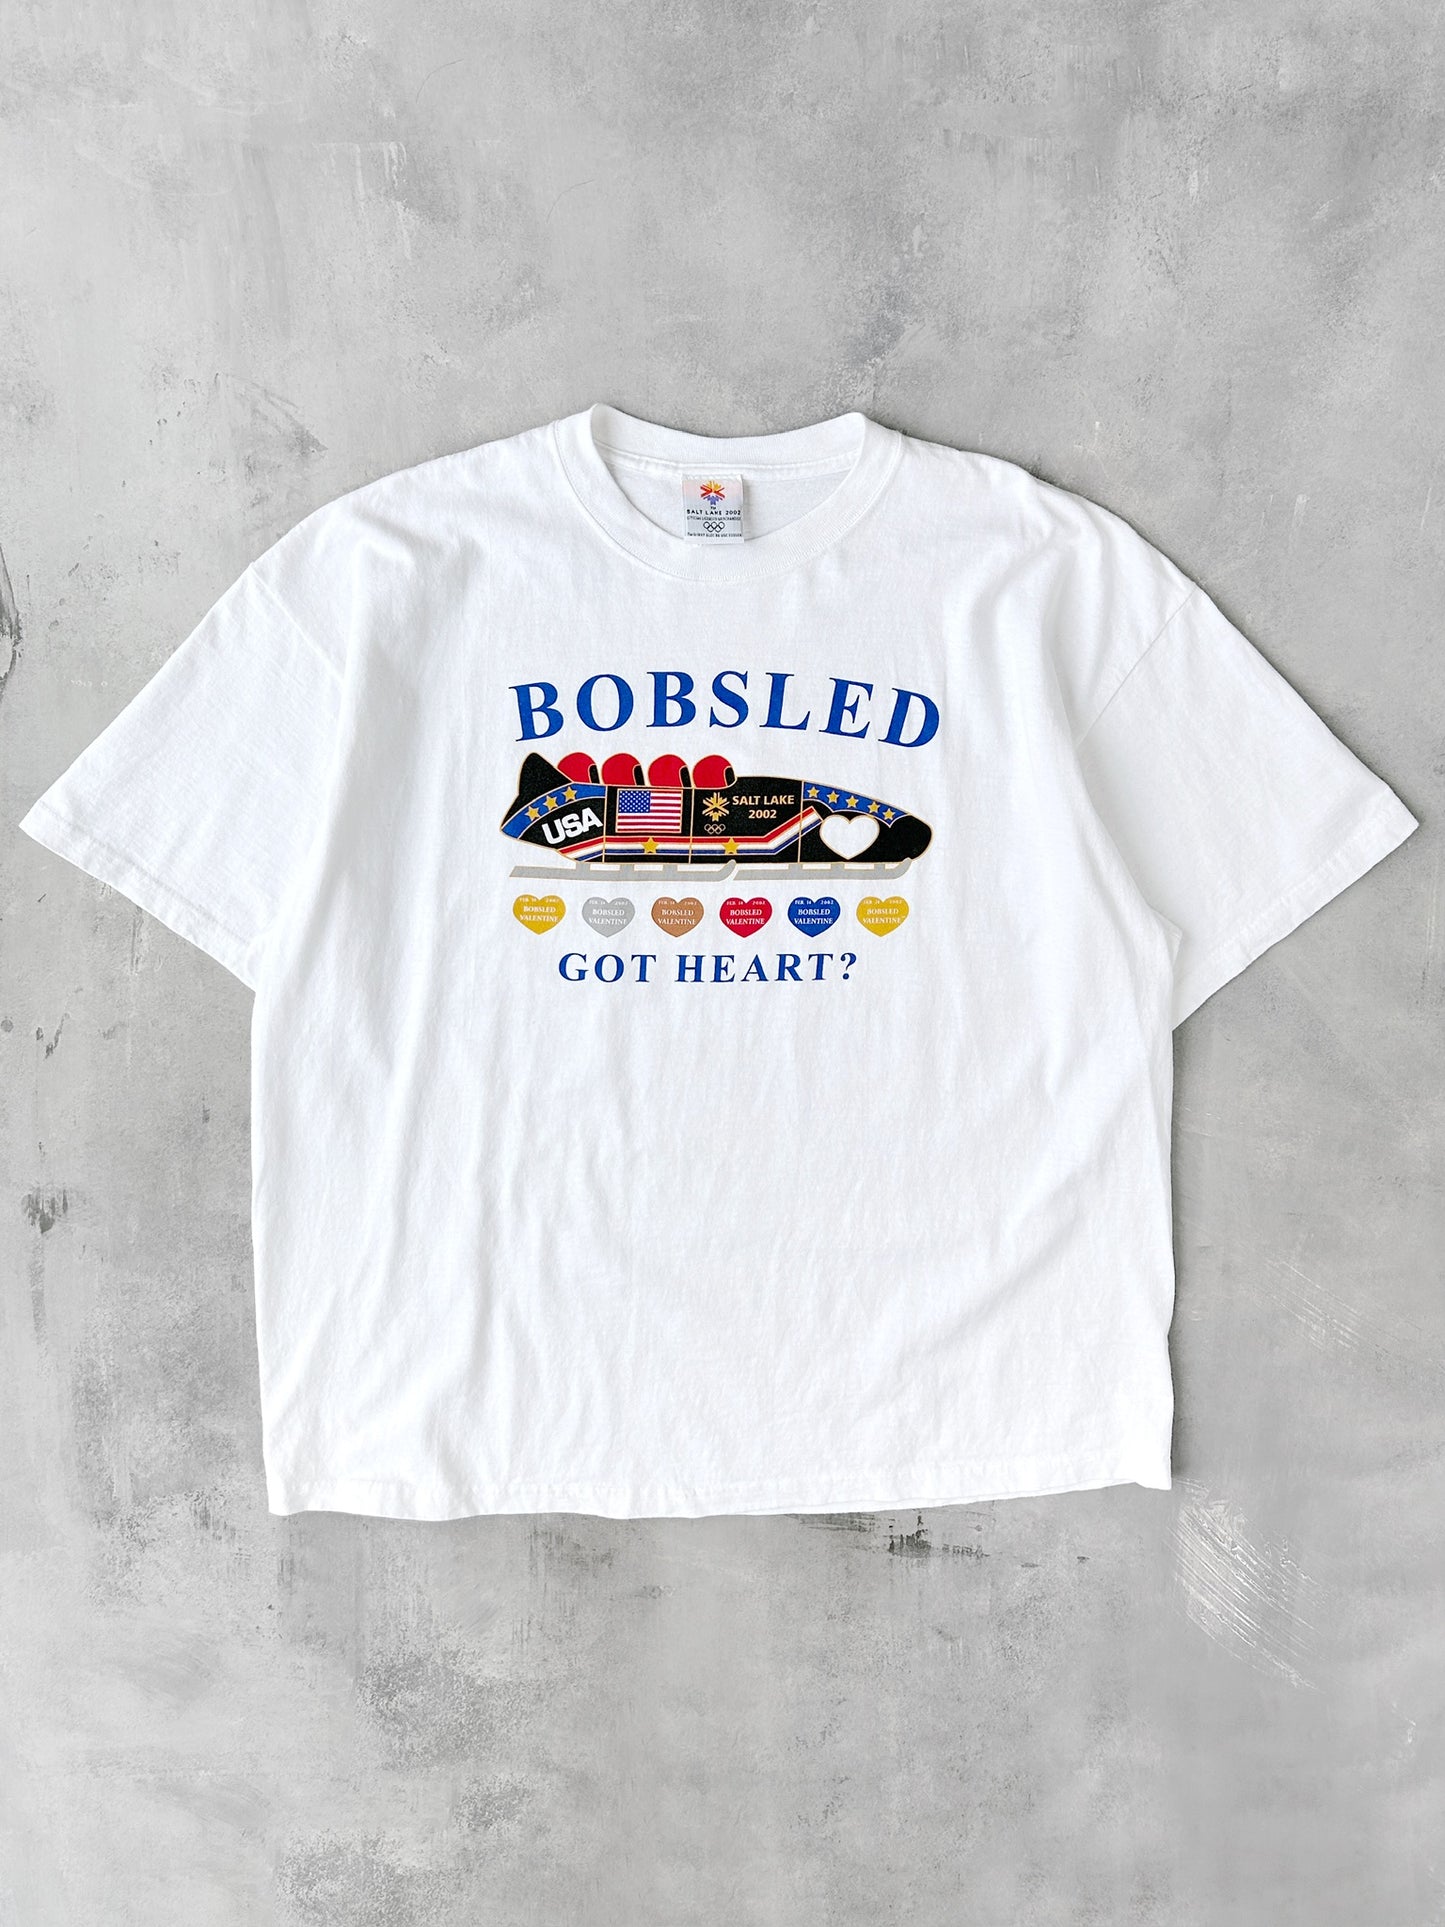 Olympic Bobsled T-Shirt '02 - XXL